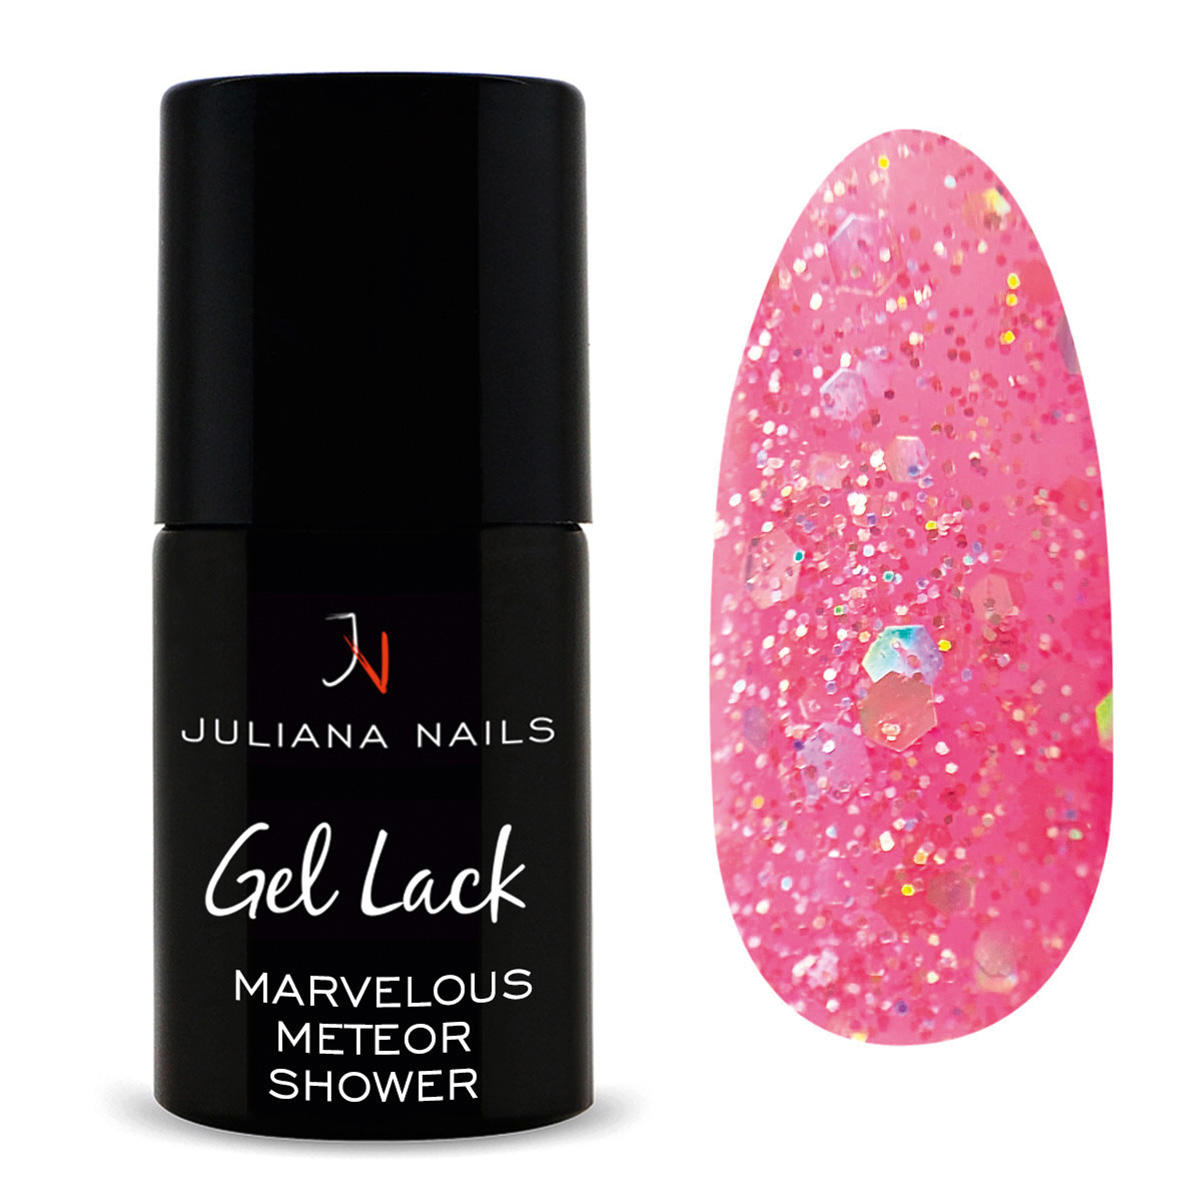 Juliana Nails Gel Lack Glitter/Shimmer  - 1